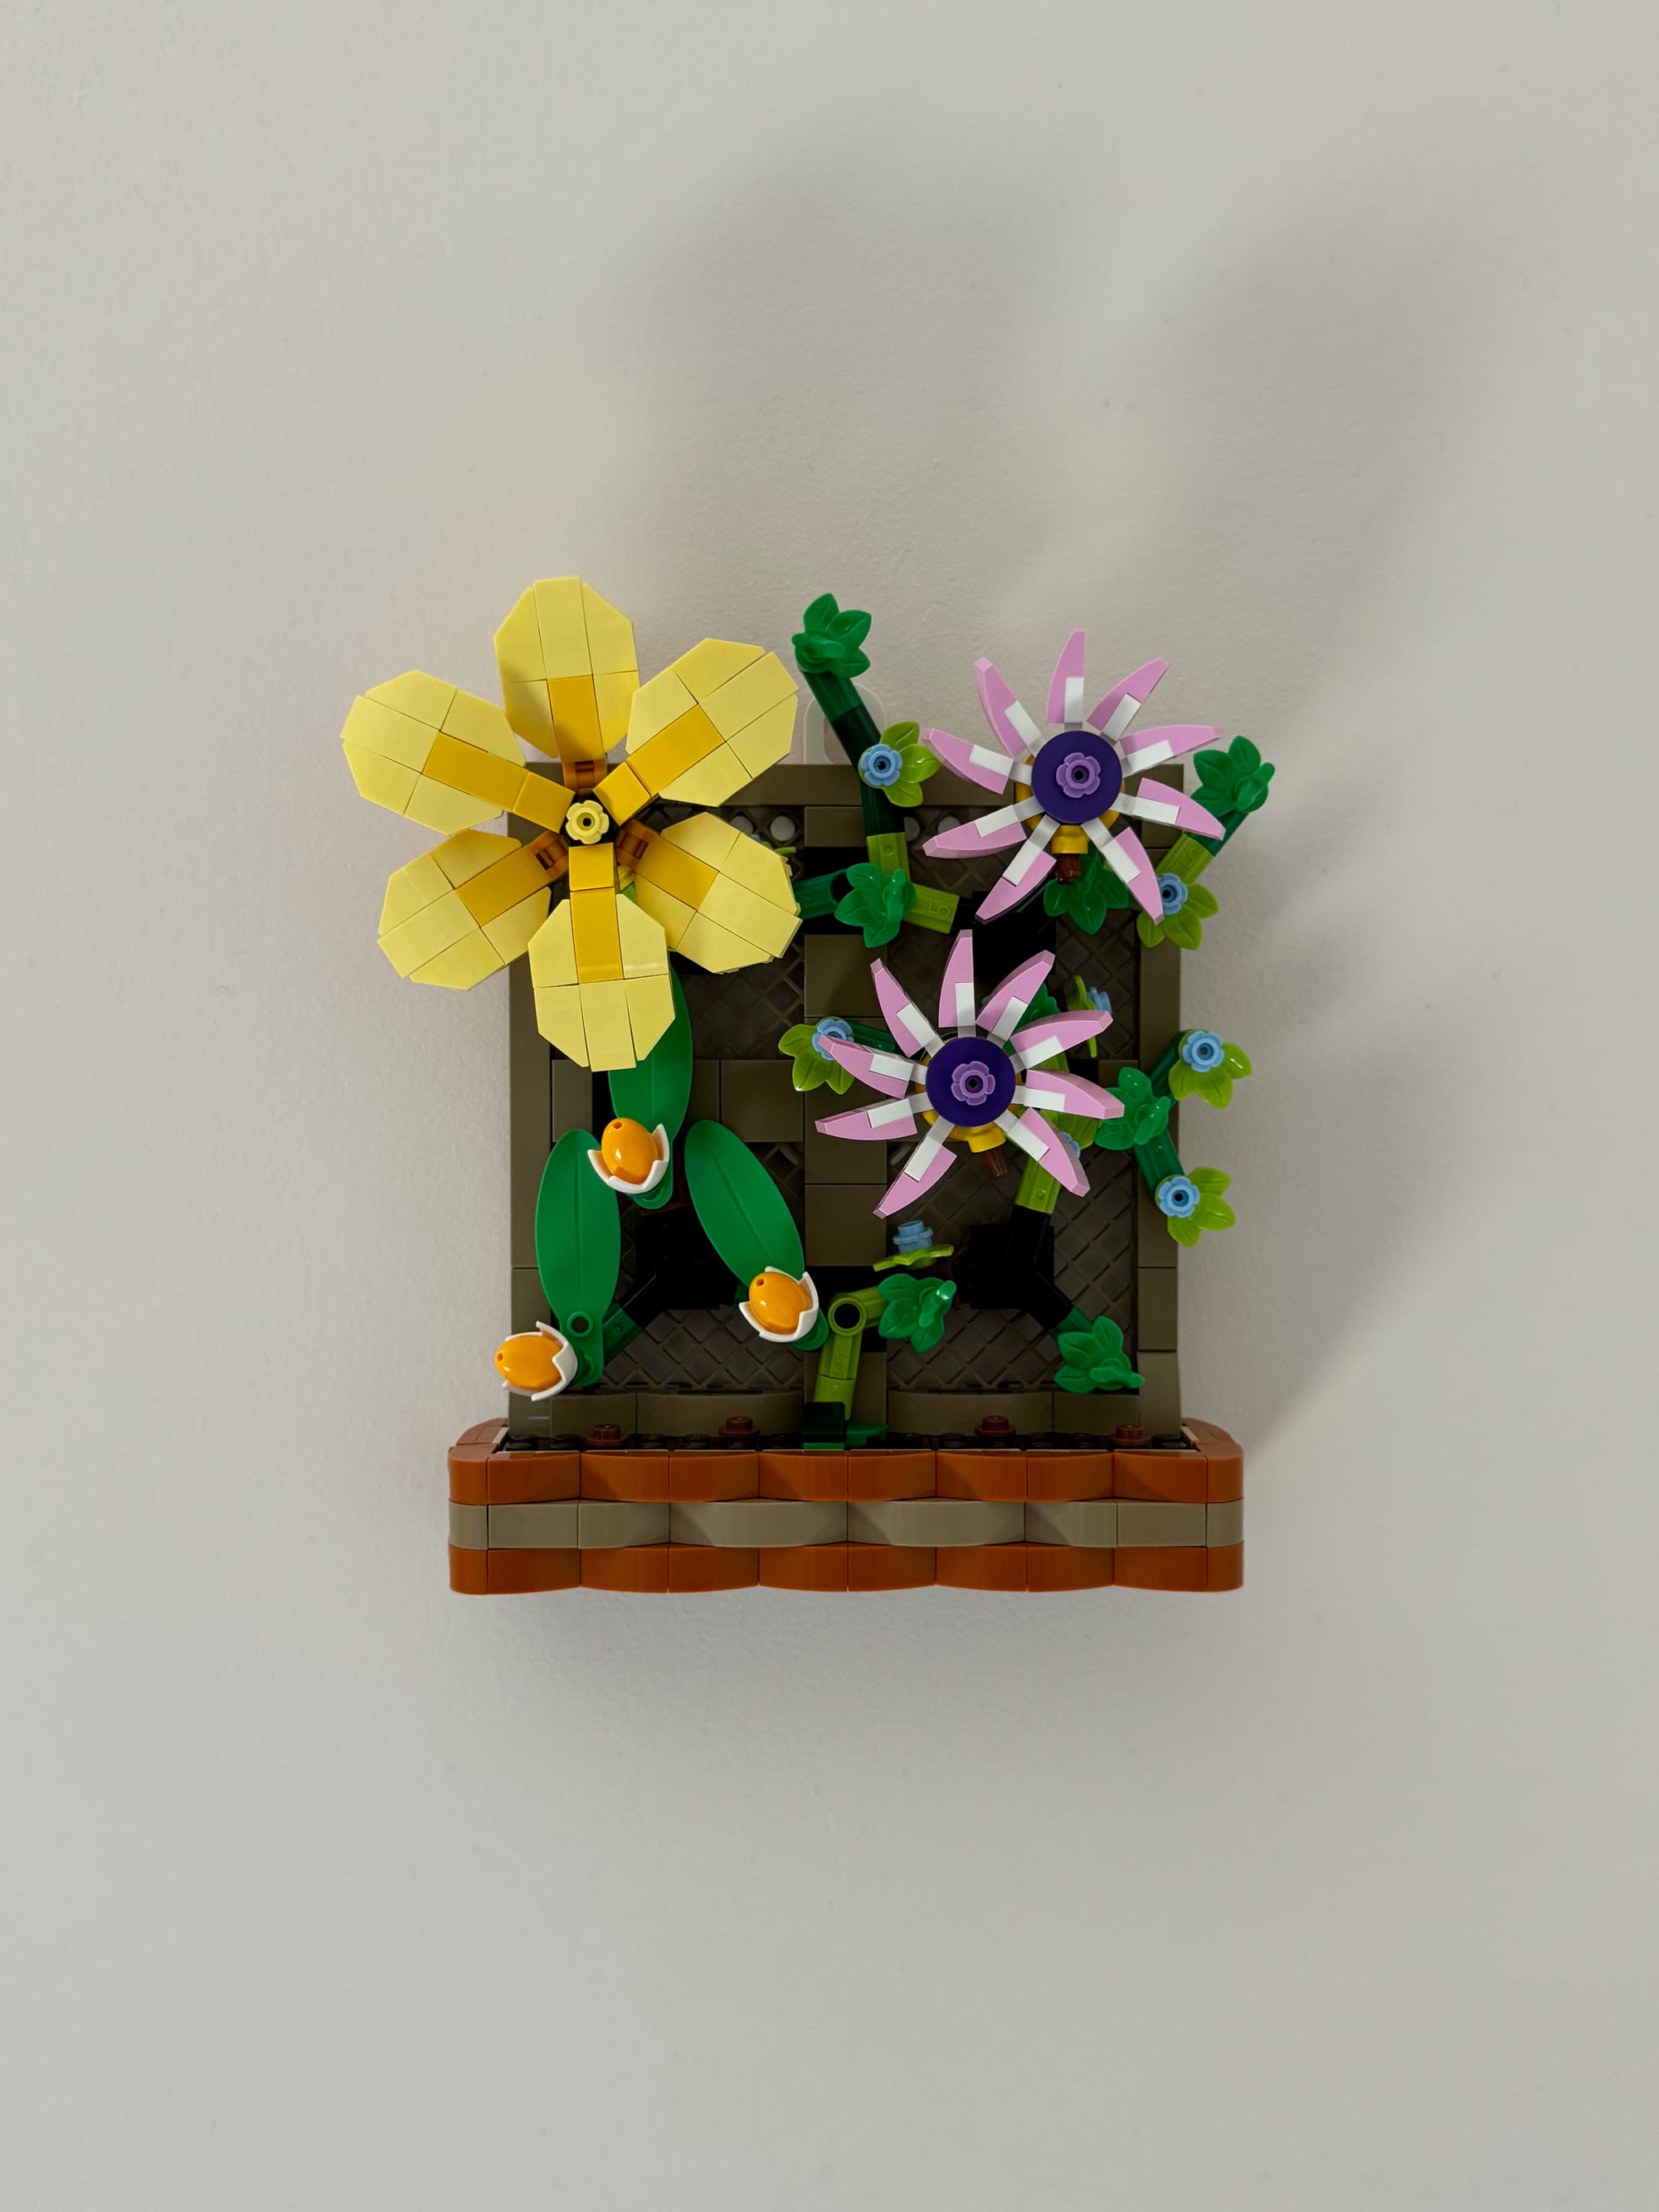 LEGO set 40683 Flower Trellis Display sitting on a table